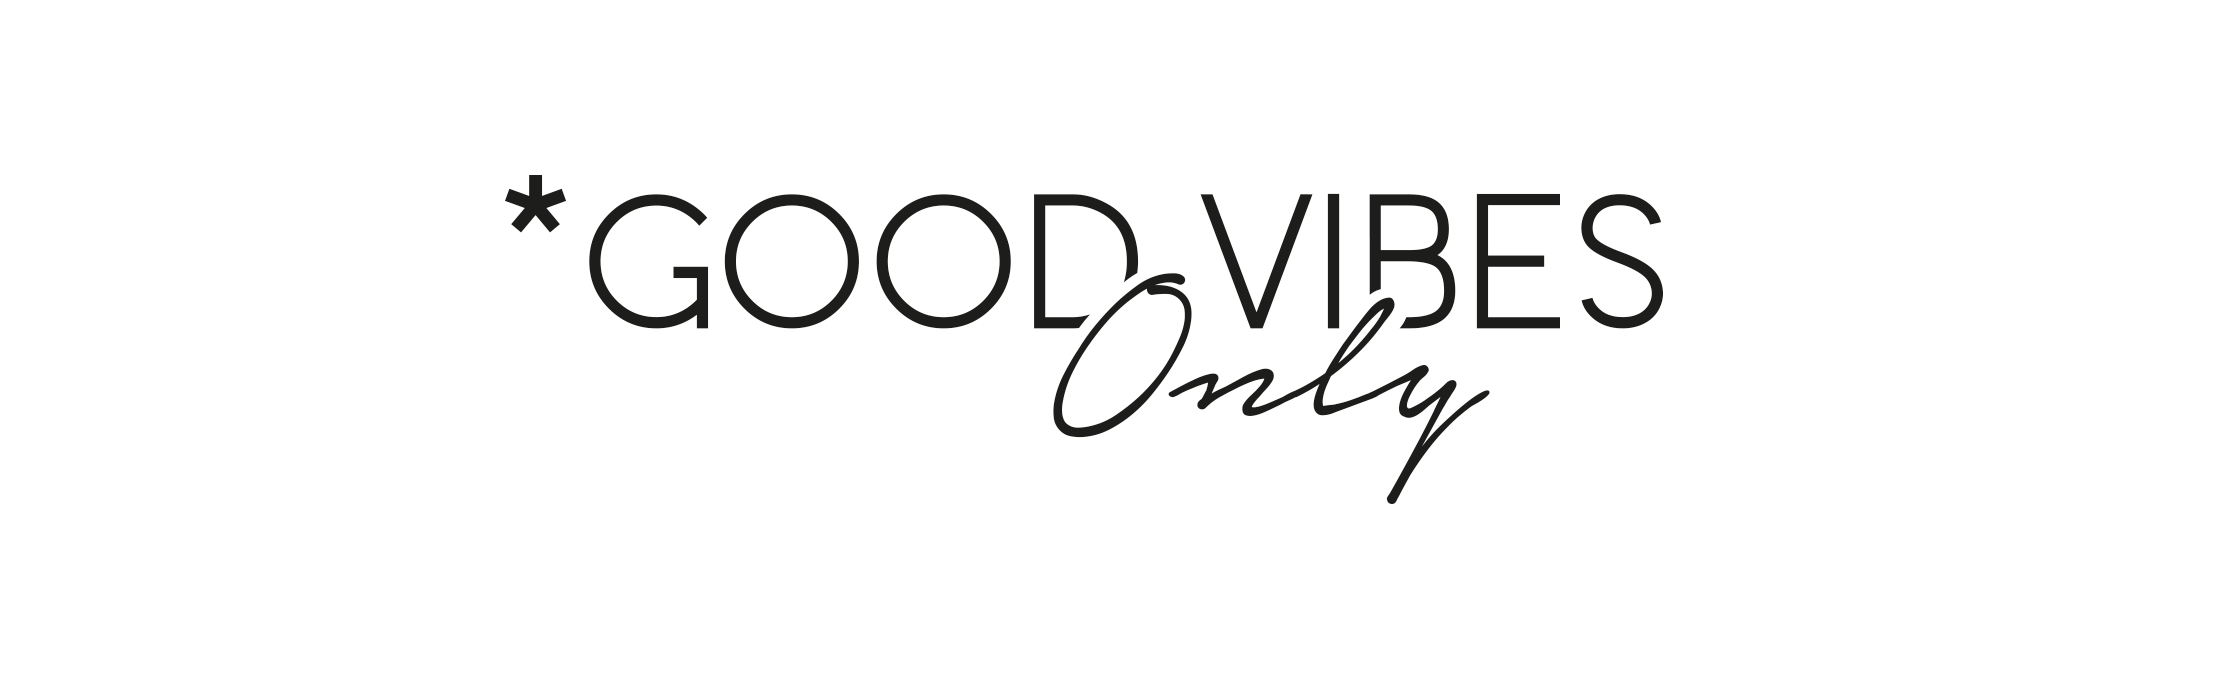 Good vibes на русский. Good Vibes only. Good Vibes картинки. Good Vibes логотип. Обои с надписью good Vibes.